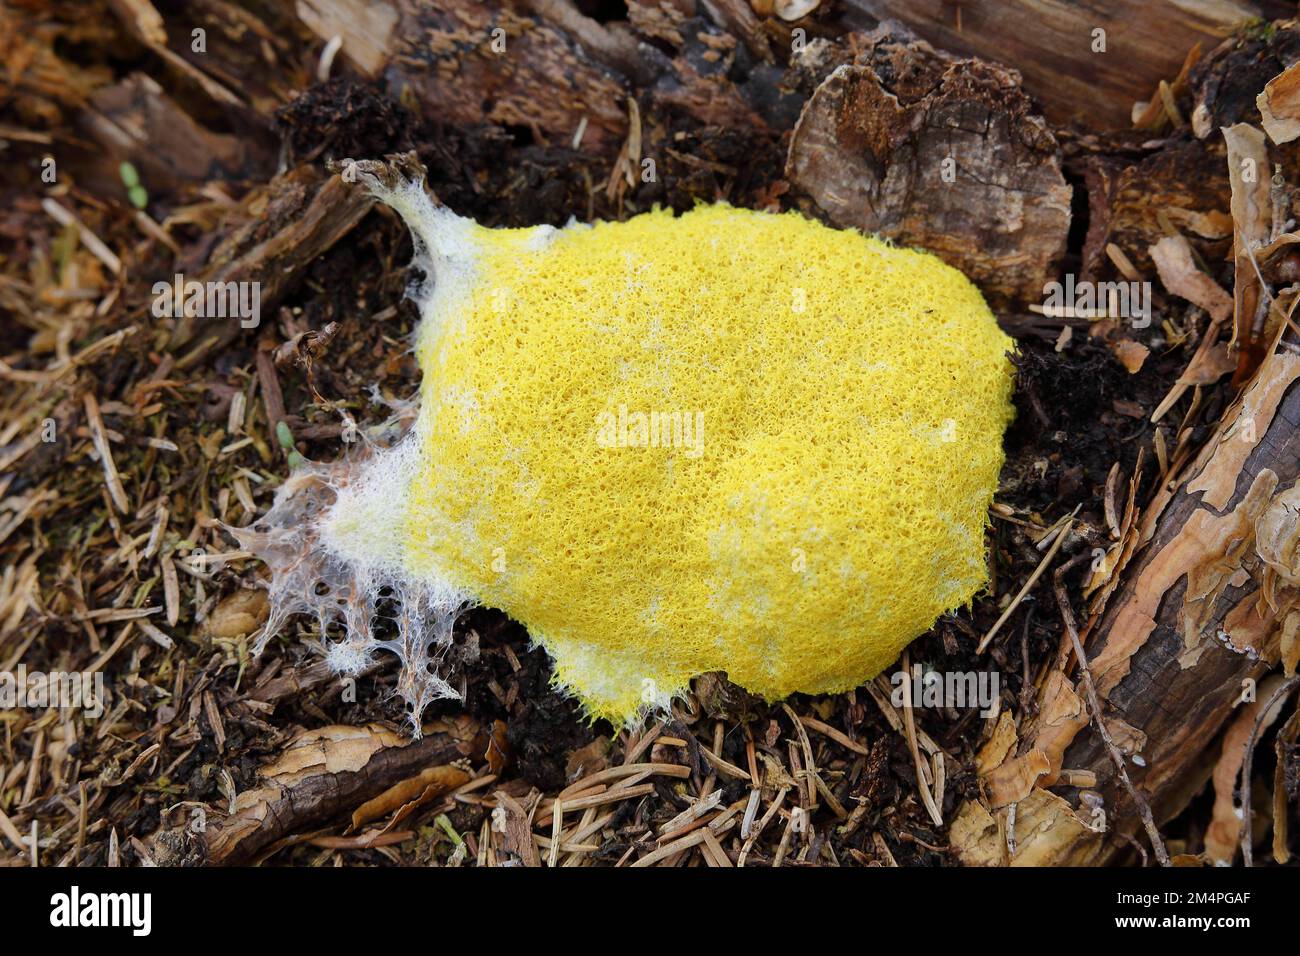 Dog vomit slime mold (Fuligo septica), witch butter, yellow foamy fruiting body on tree stump, Wilnsdorf, North Rhine-Westphalia, Germany Stock Photo